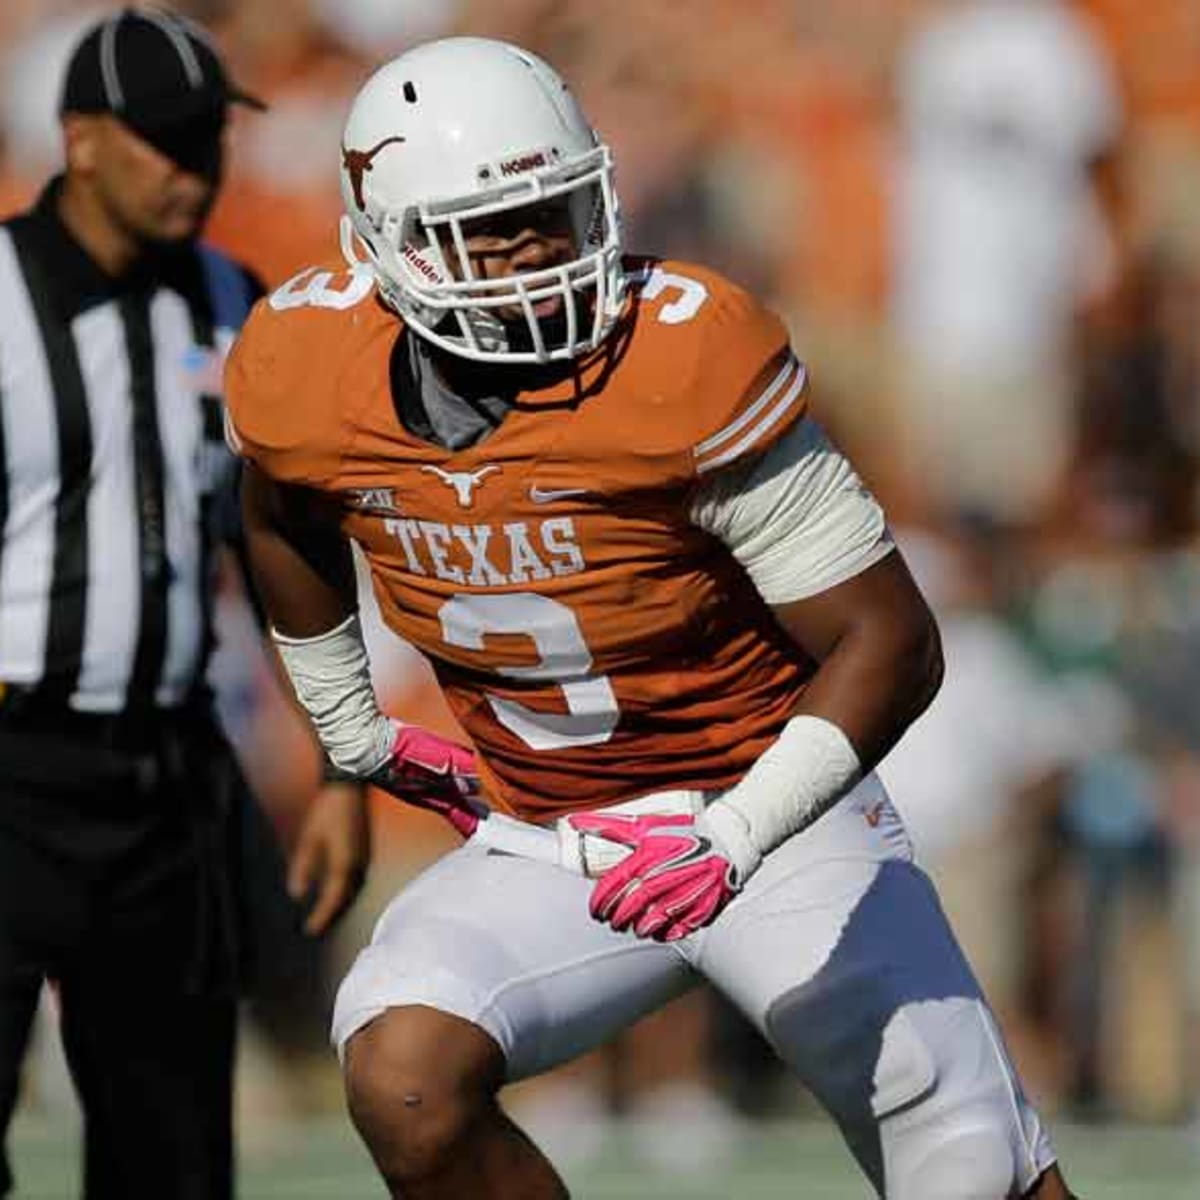 2015 Texas NFL Draft profile: LB Jordan Hicks 'has necessary